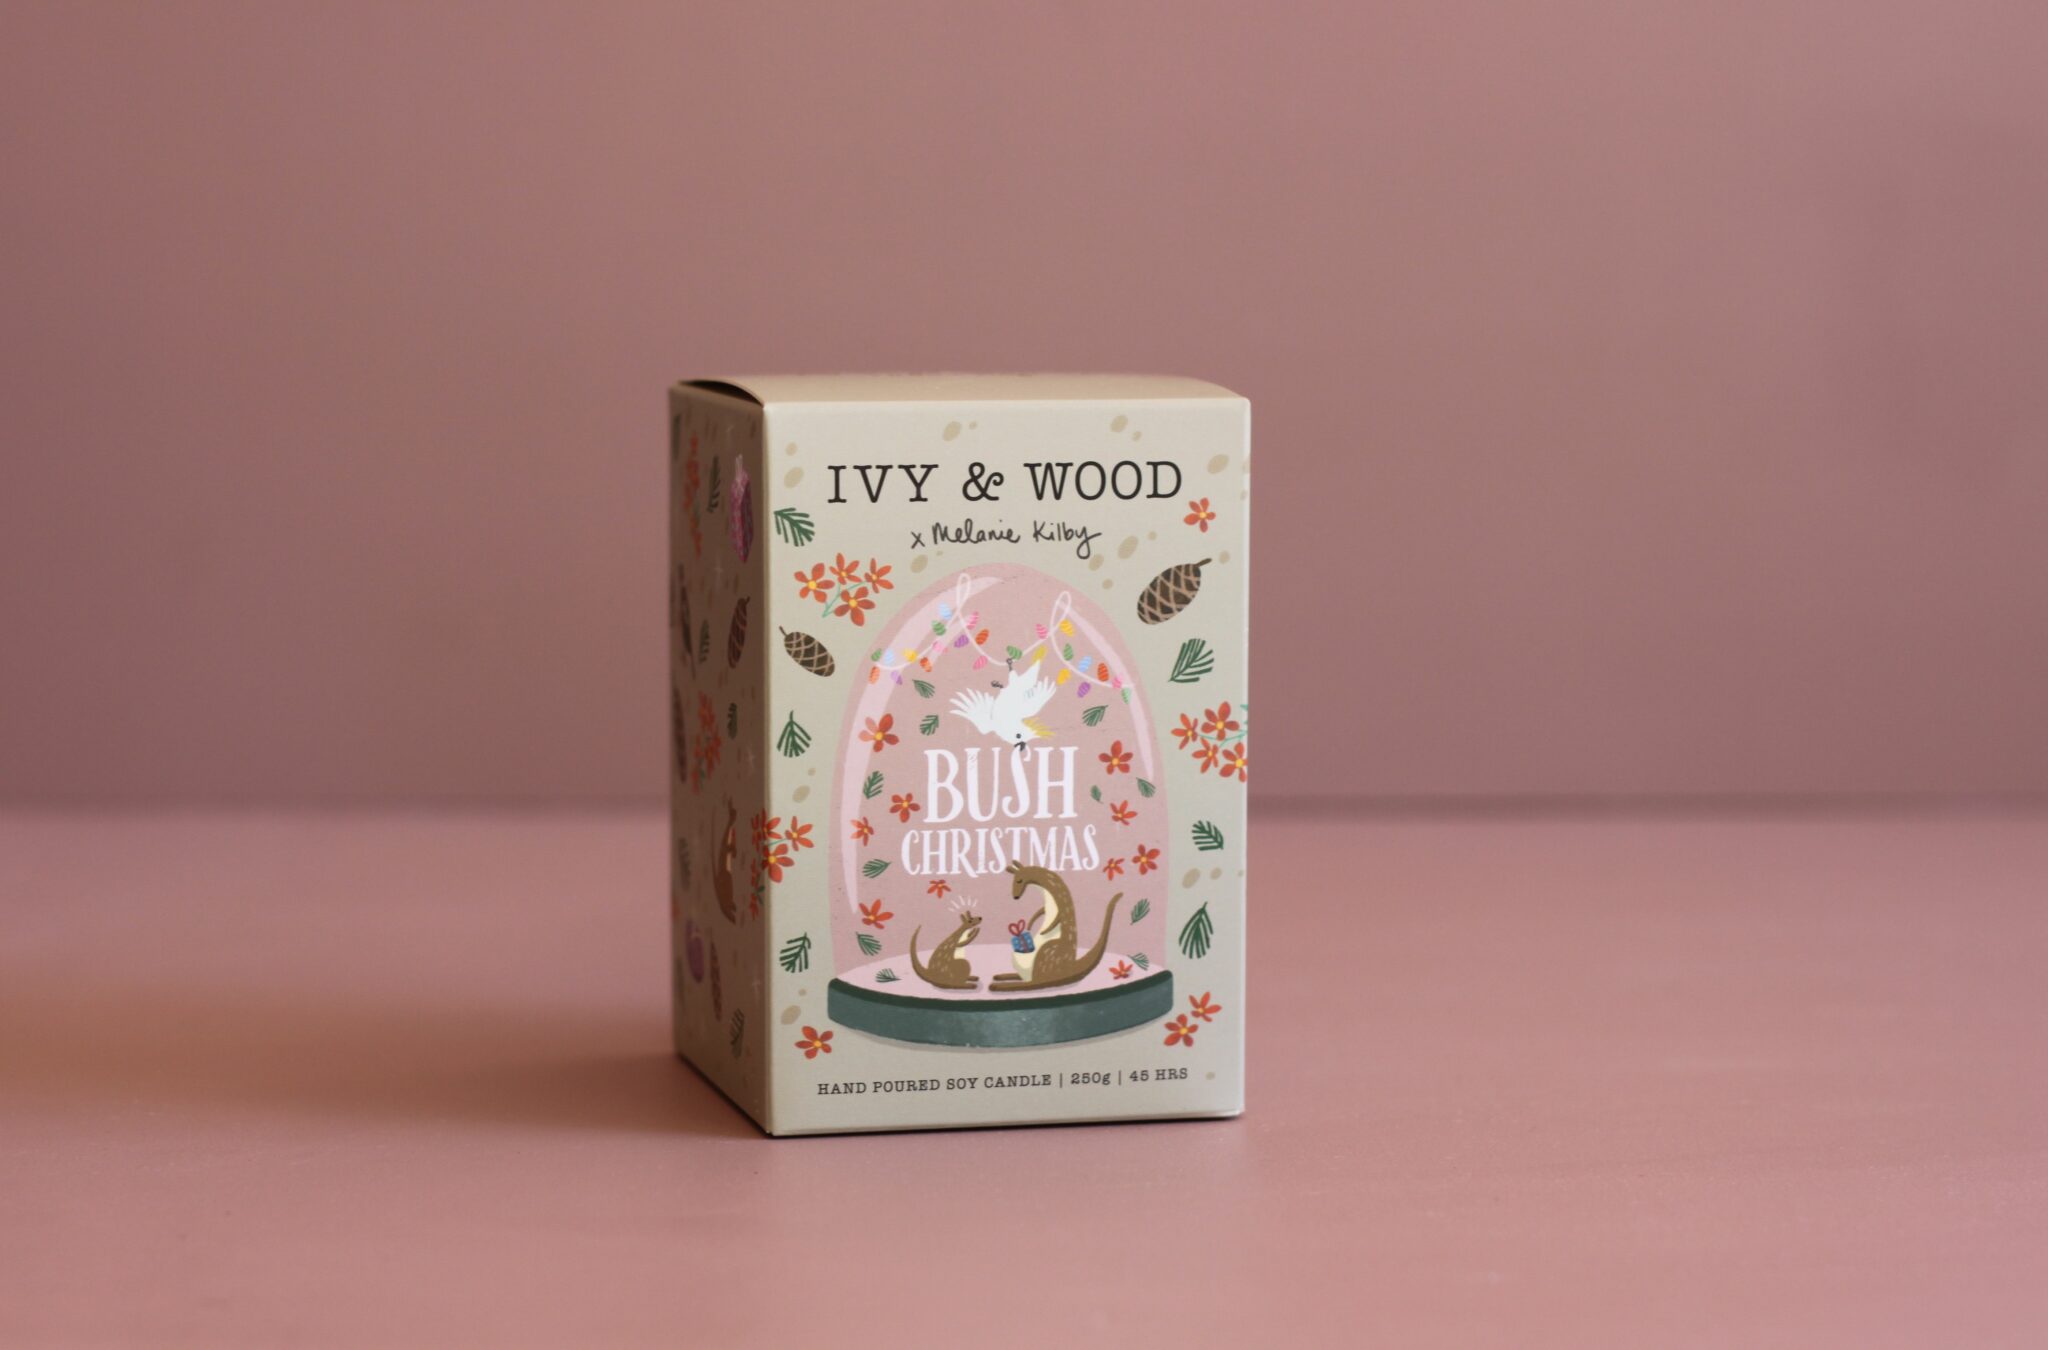 Ivy & Wood – Bush Christmas Candle